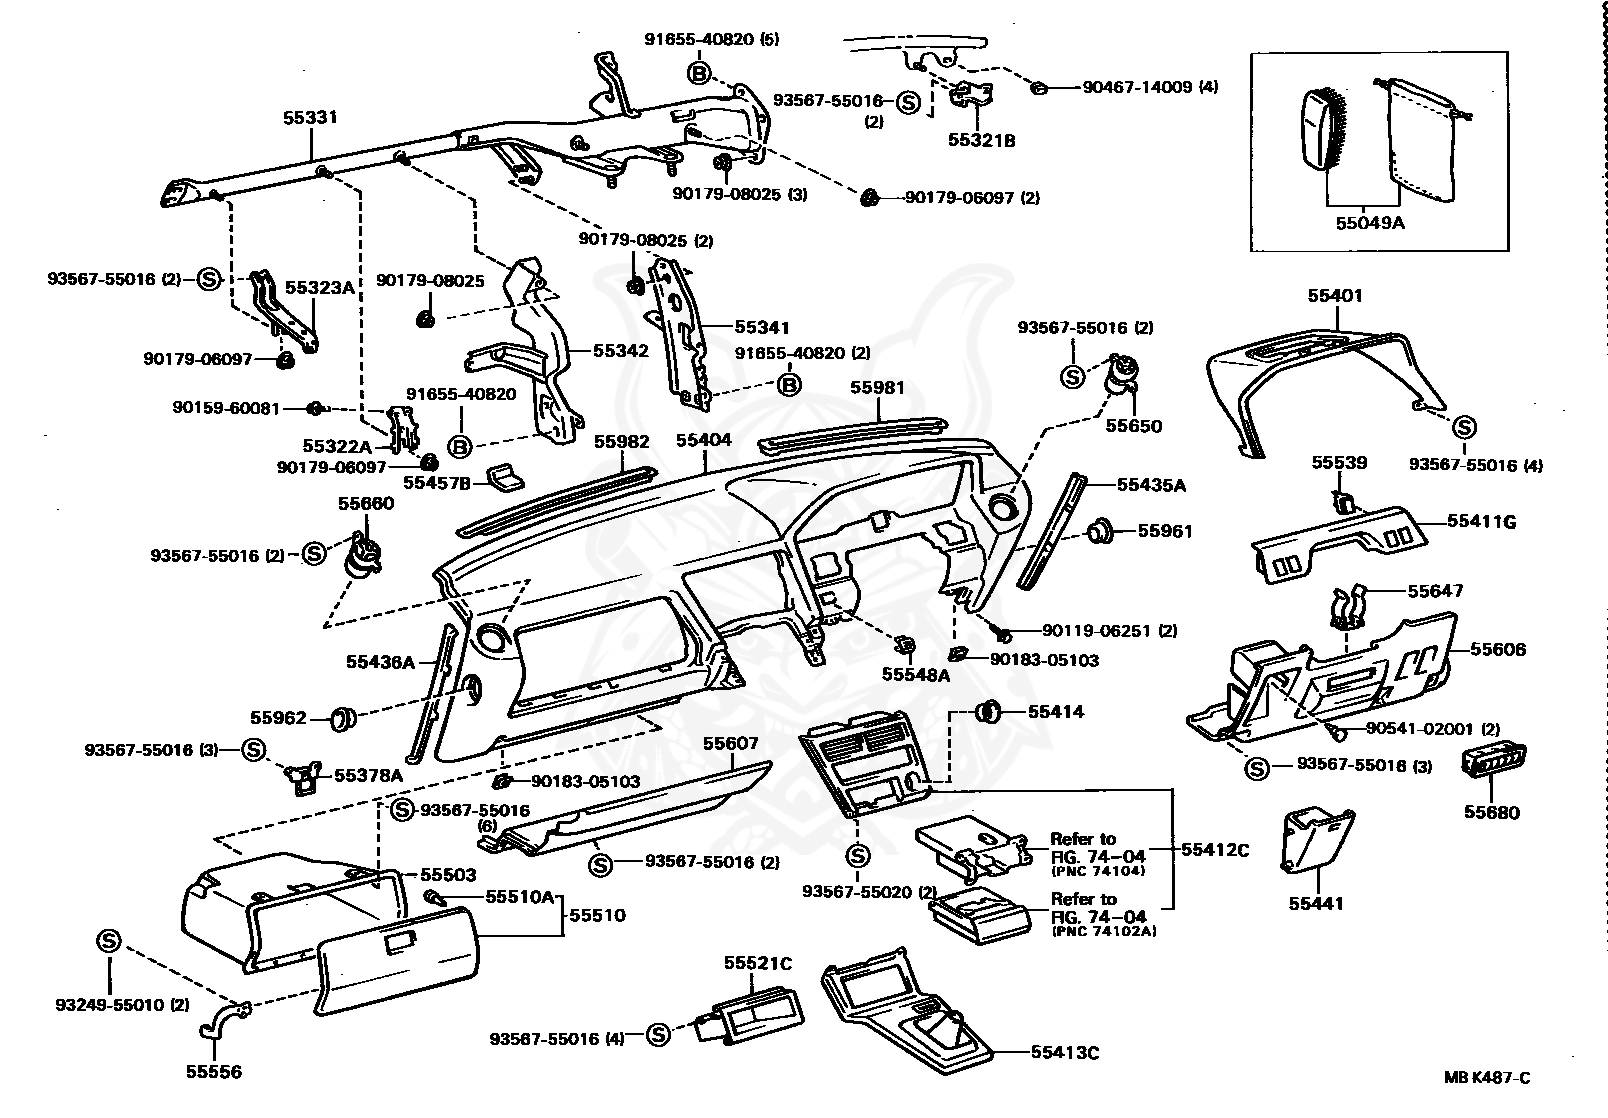 55401-24030-01 - Toyota - Safety Pad Sub-assy, Instrument Panel 